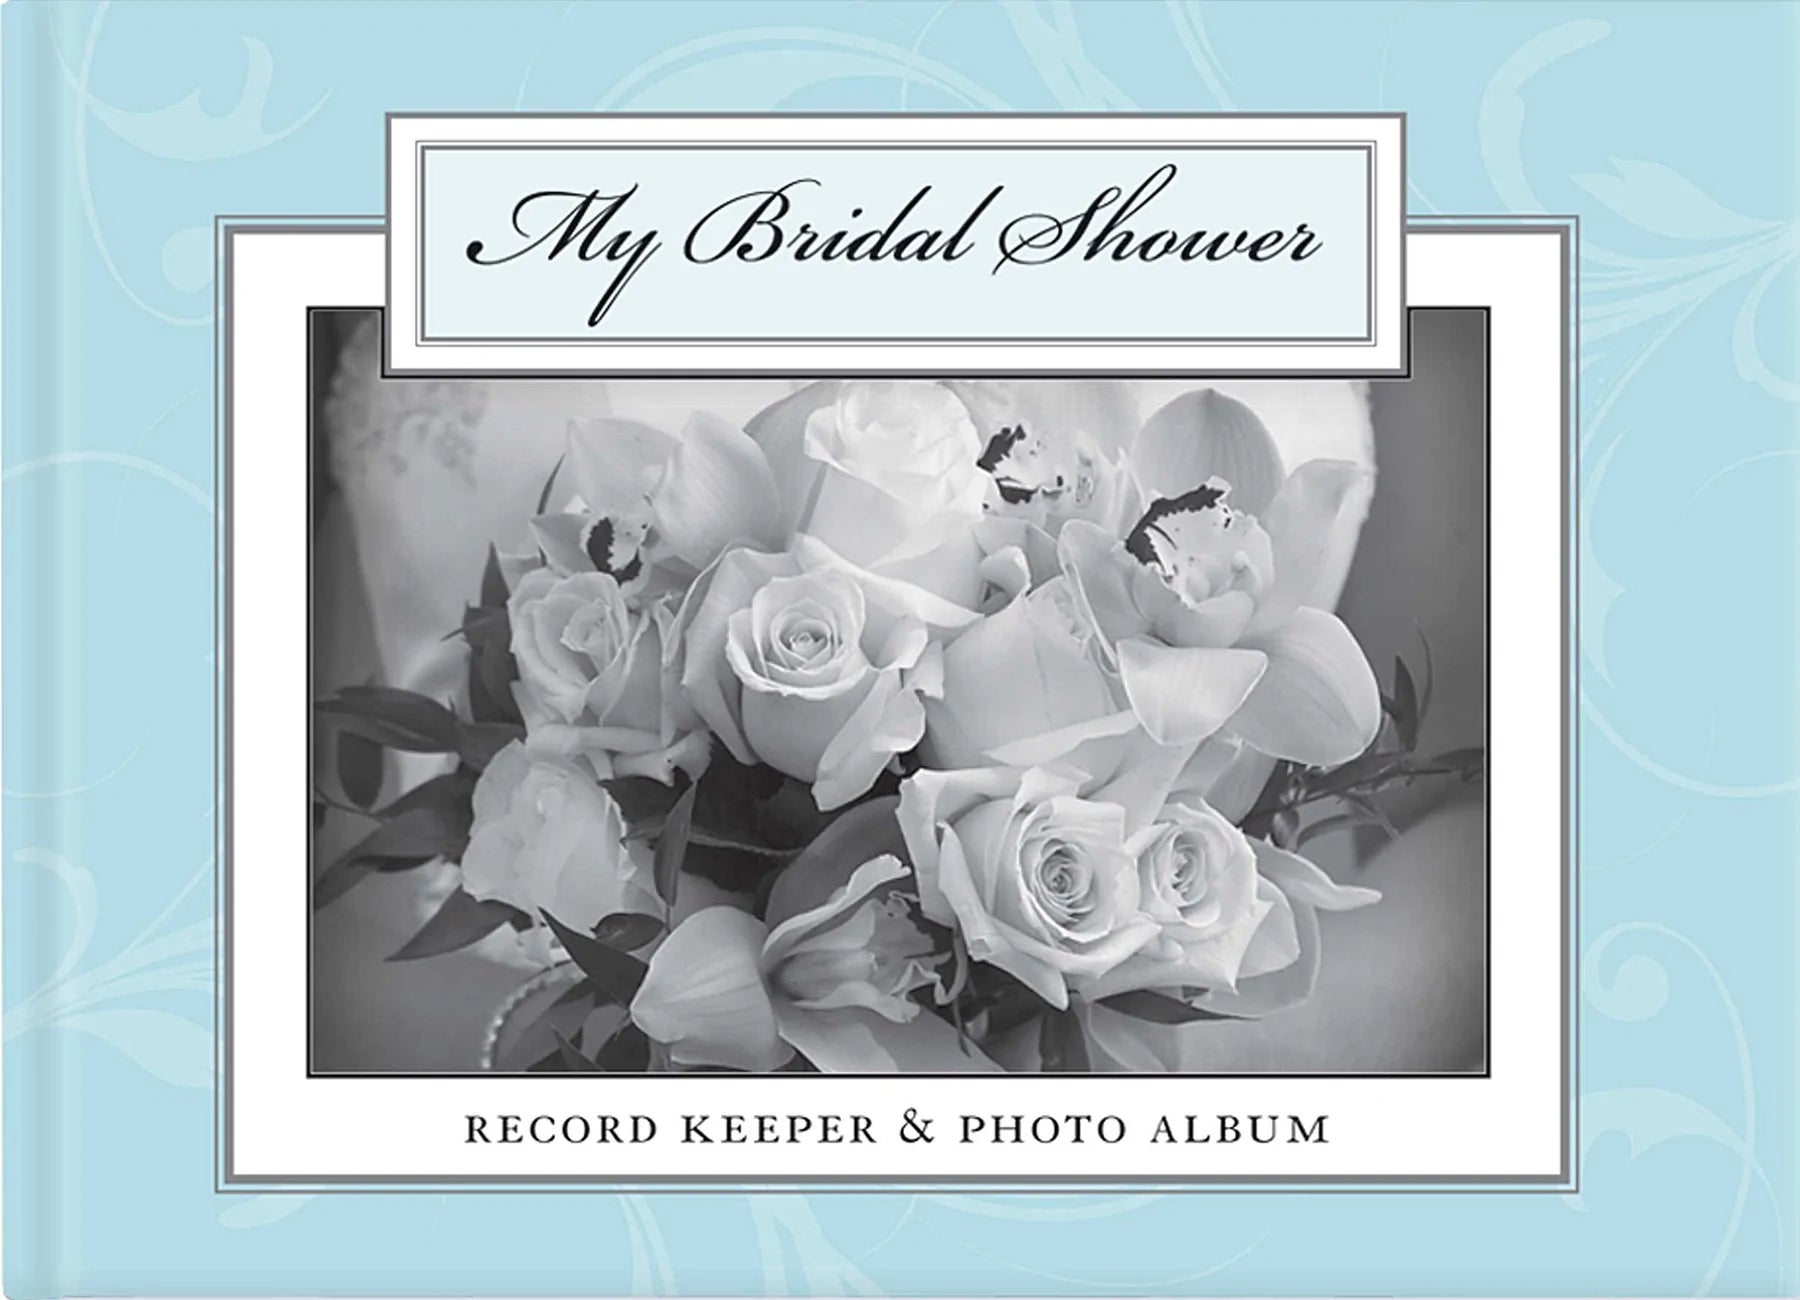 My Bridal Shower: Record Keeper & Photo Album